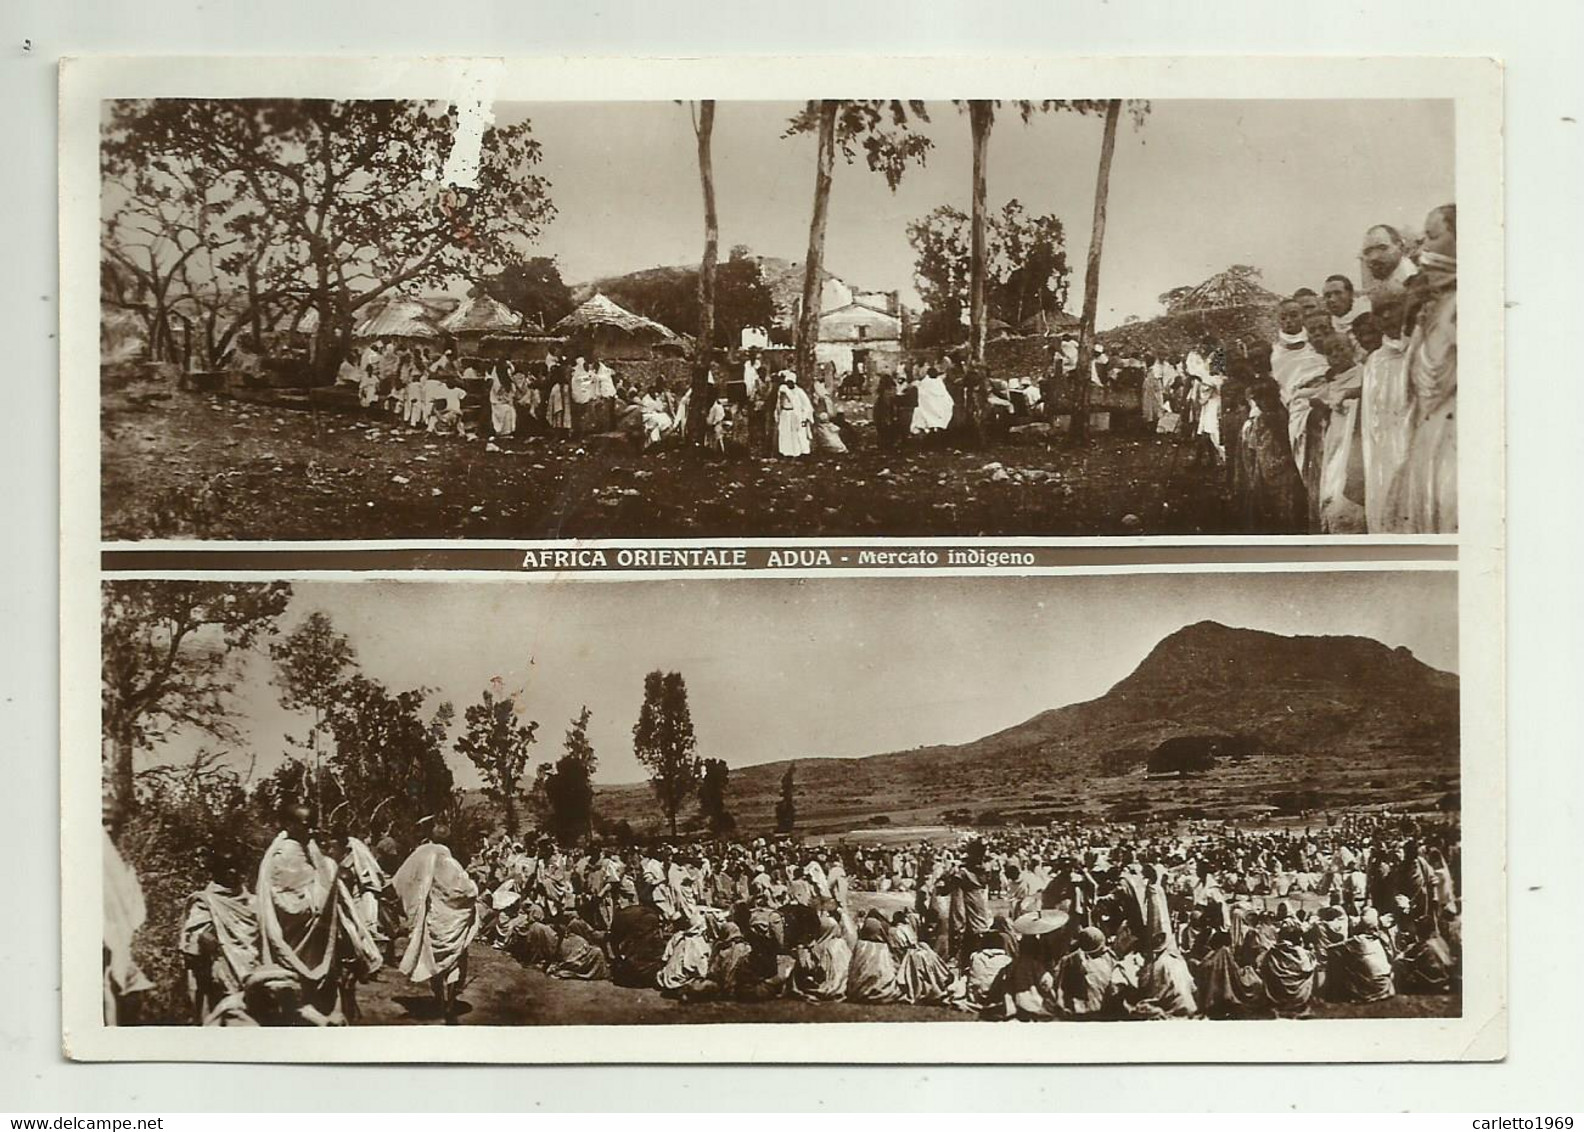 AFRICA ORIENTALE ADUA - MERCATO INDIGENO 1938 - NV FG ( SEGNO PARTE SX ) - Ethiopië